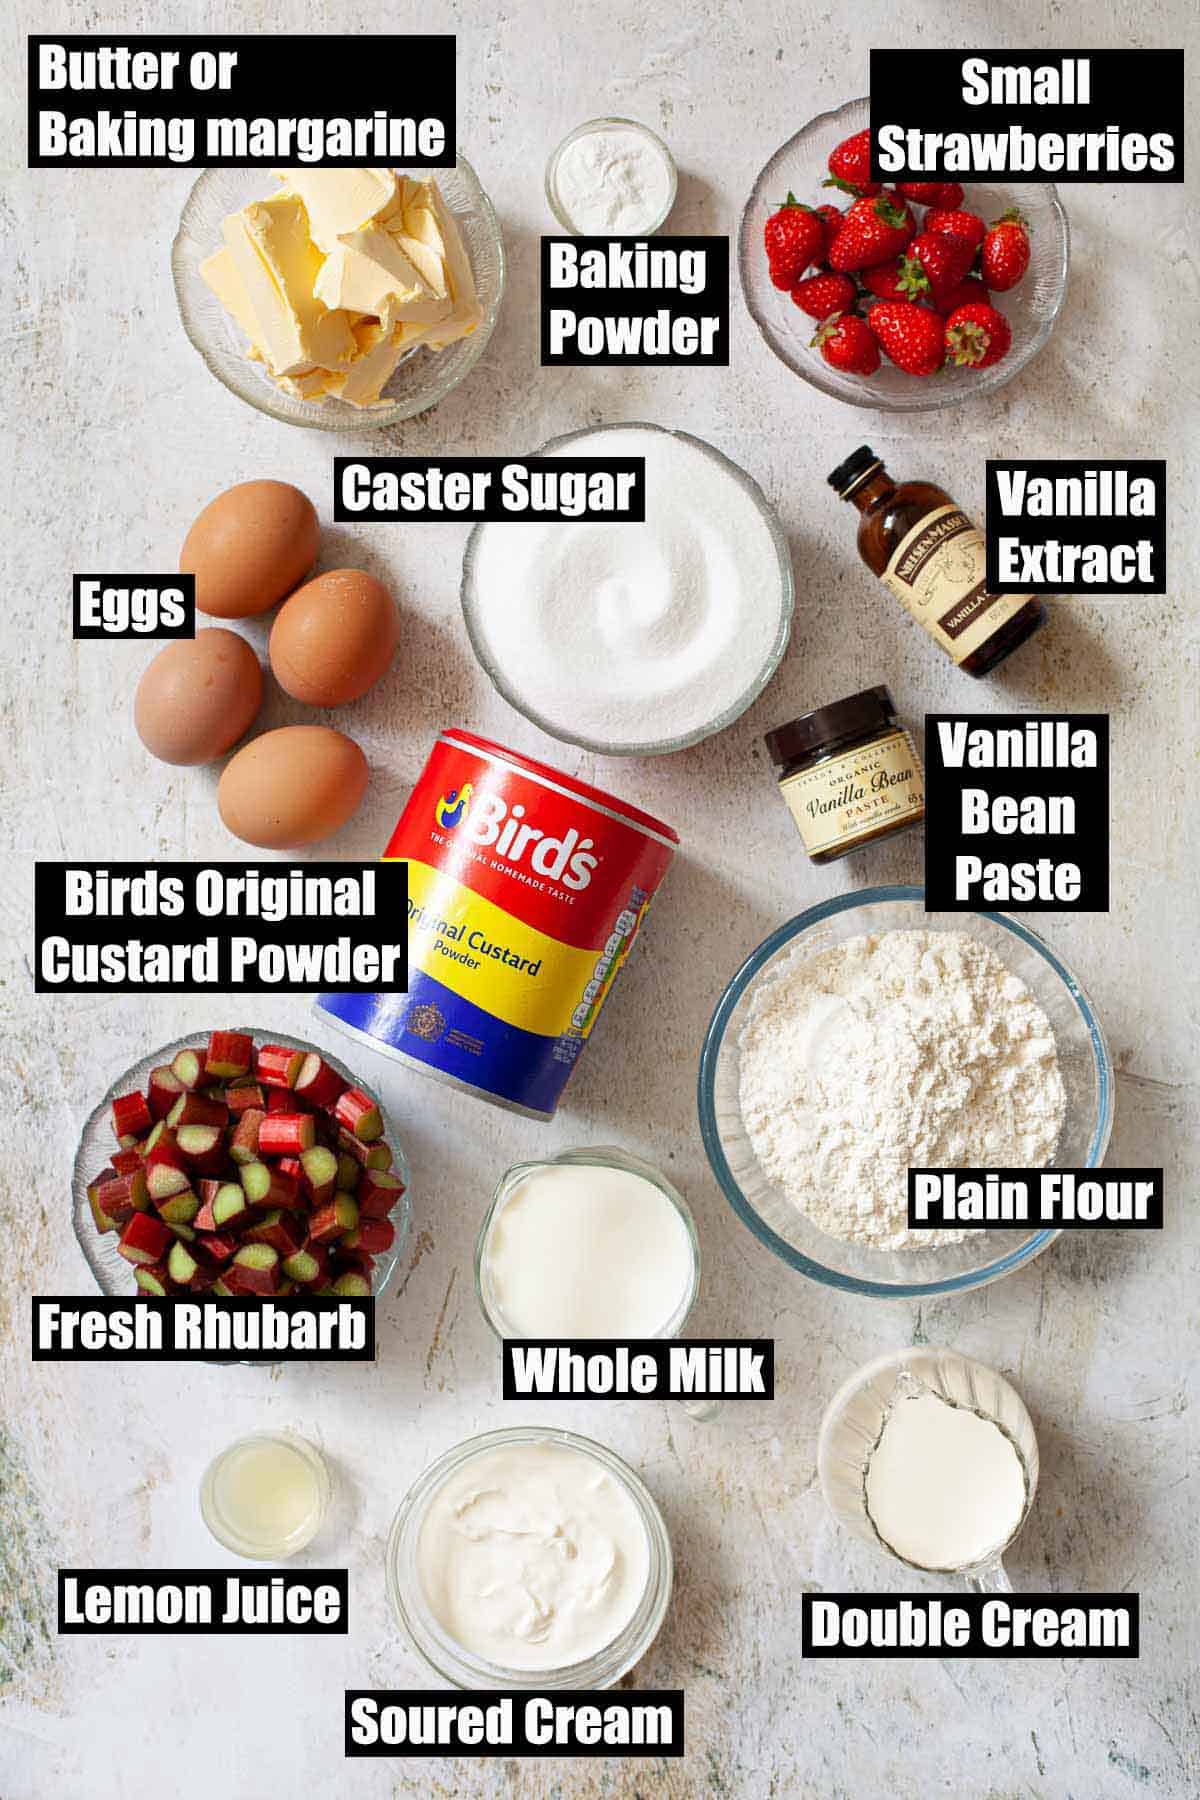 Labelled ingredients for a custard powder sponge cake.